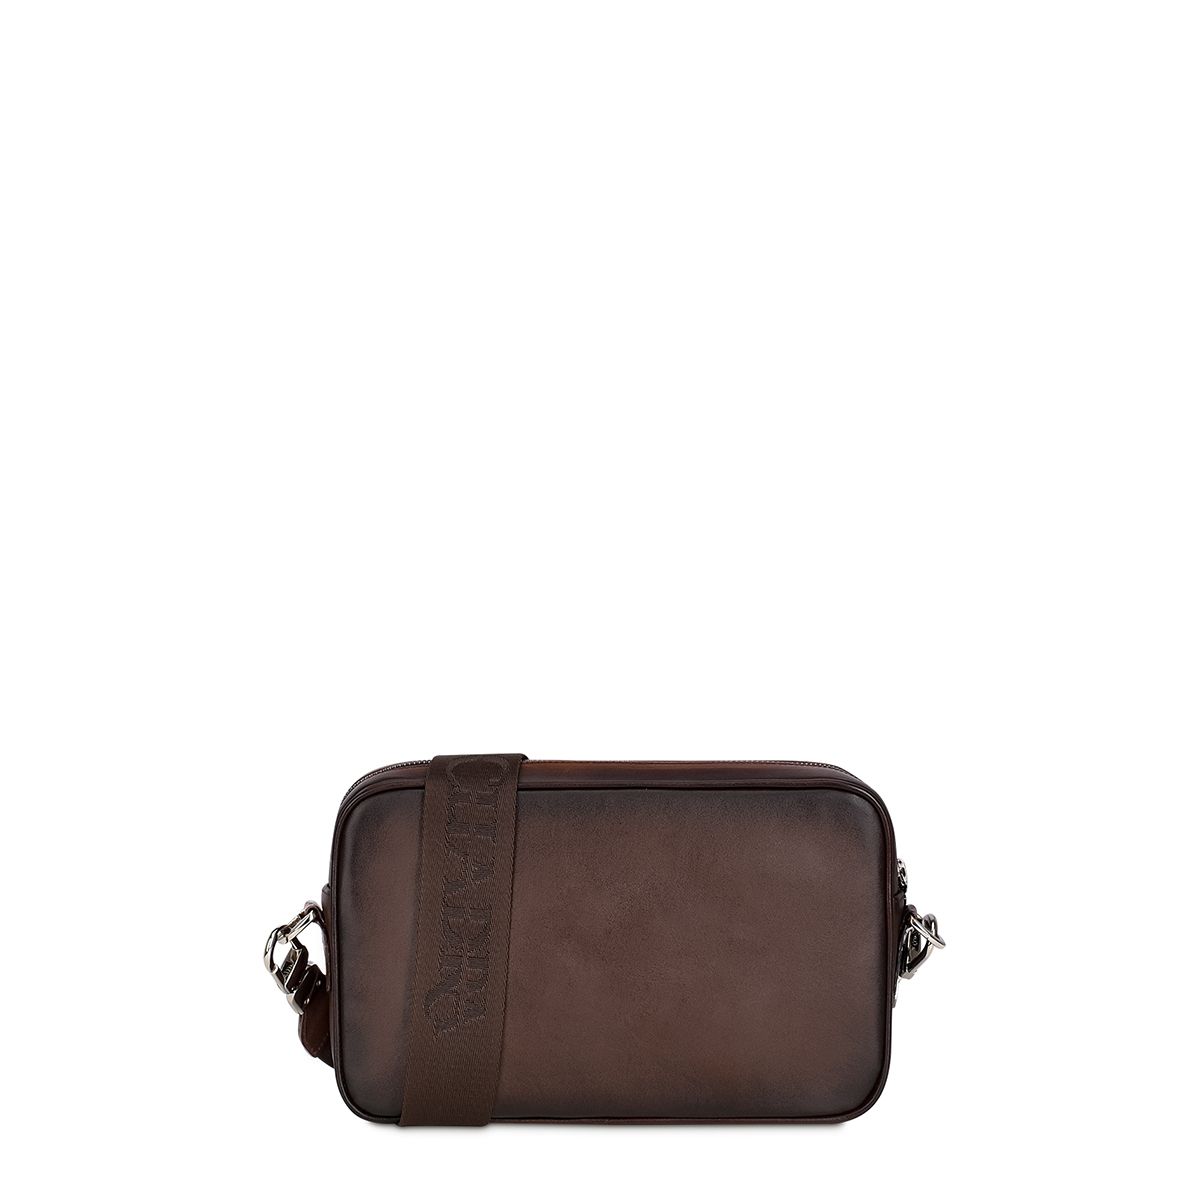 BOC04MO - Cuadra brown casual fashion moreleti chest chutch bag for men.-CUADRA-Kuet-Cuadra-Boots